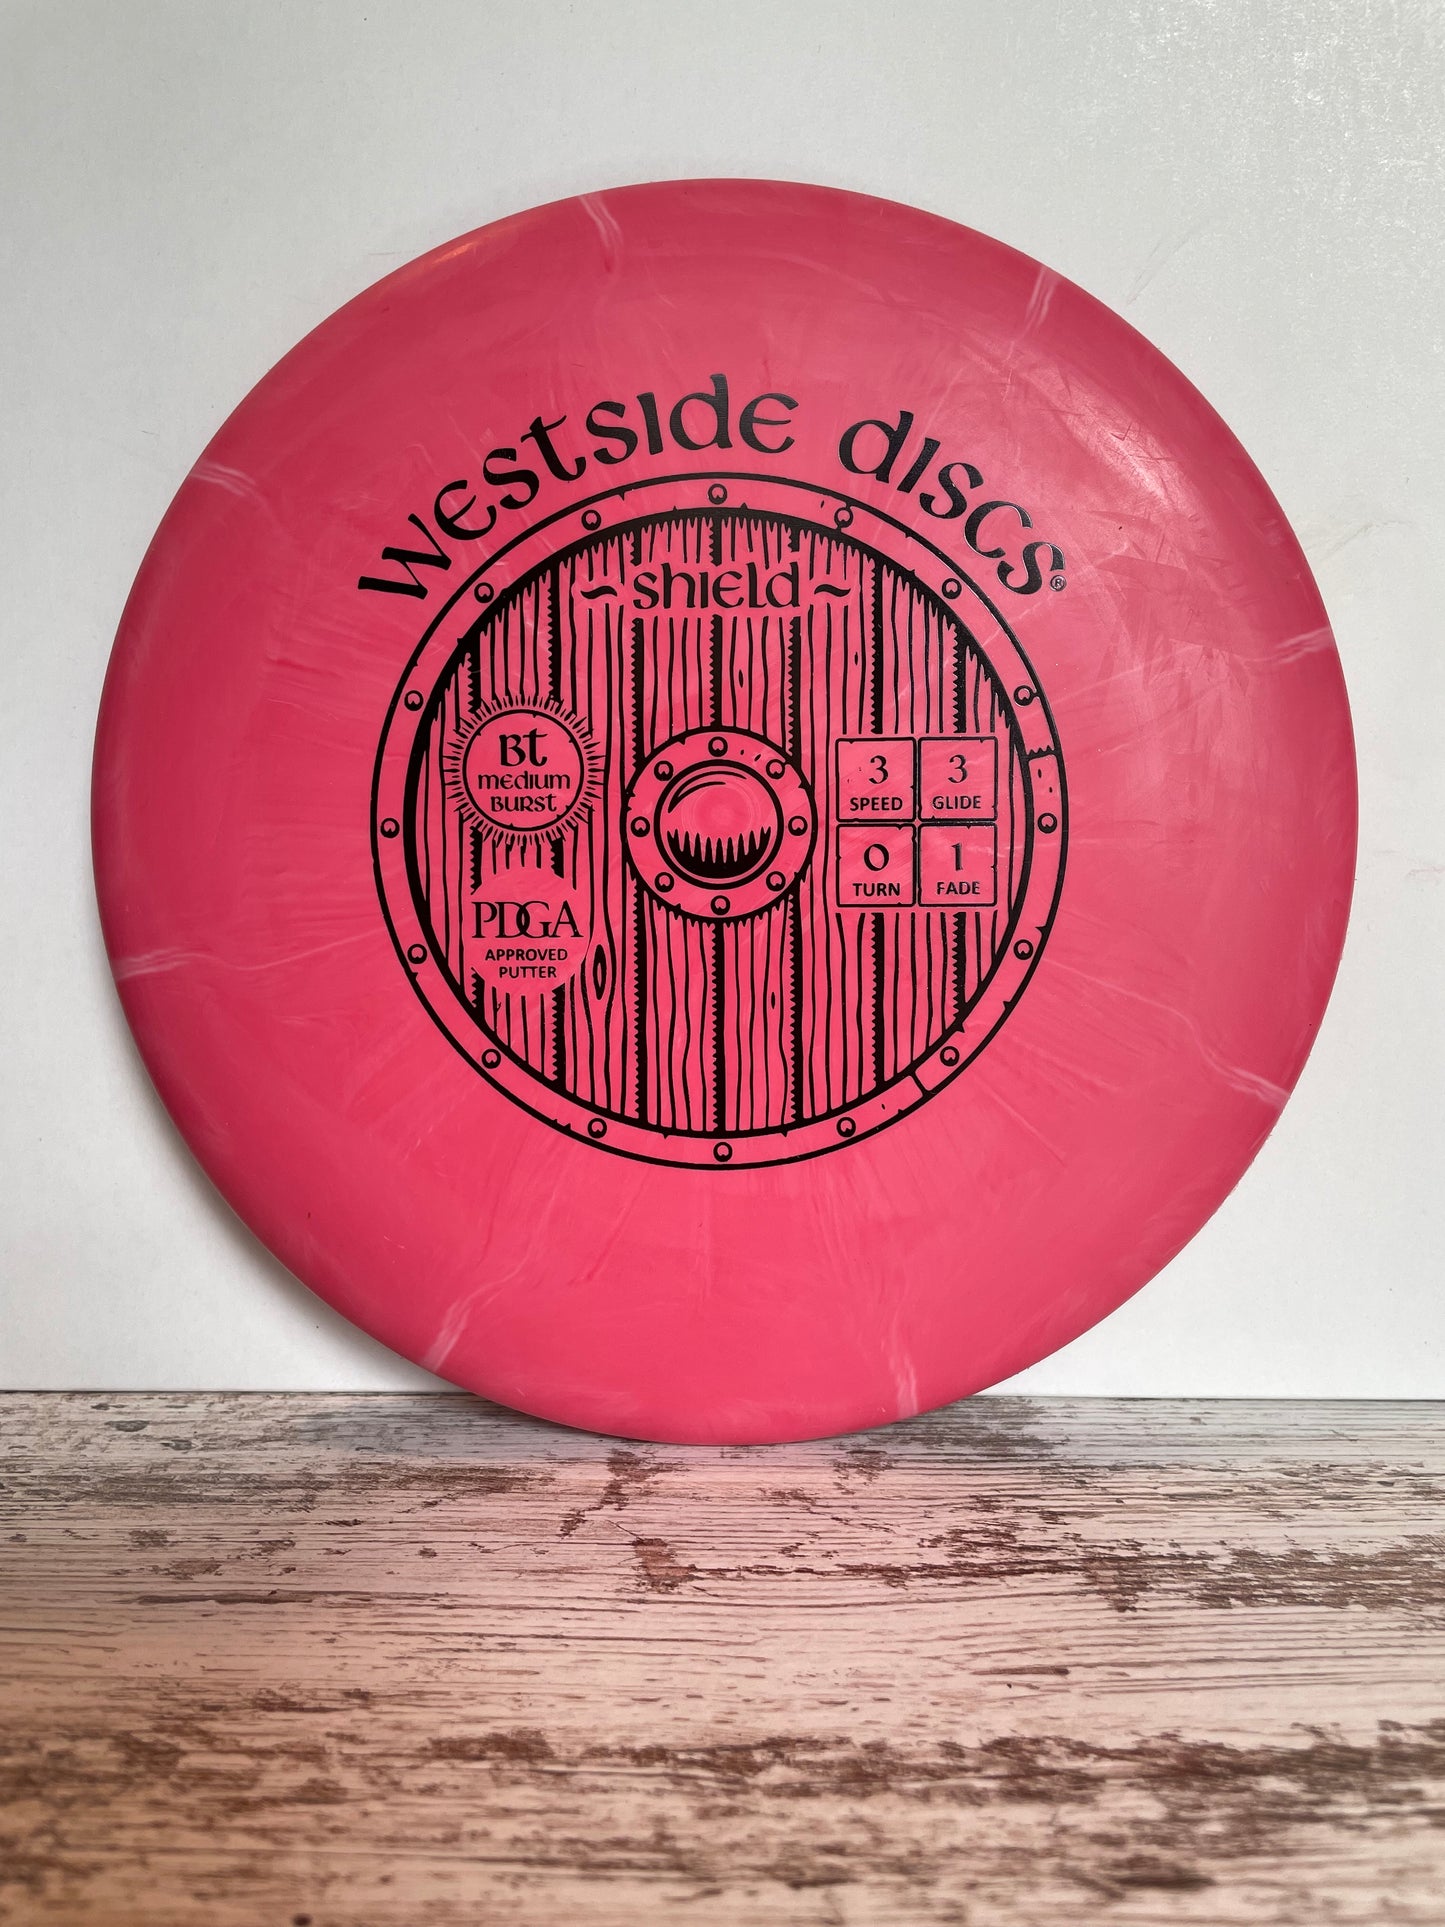 Westside Shield BT Medium Burst Red 175g Putter